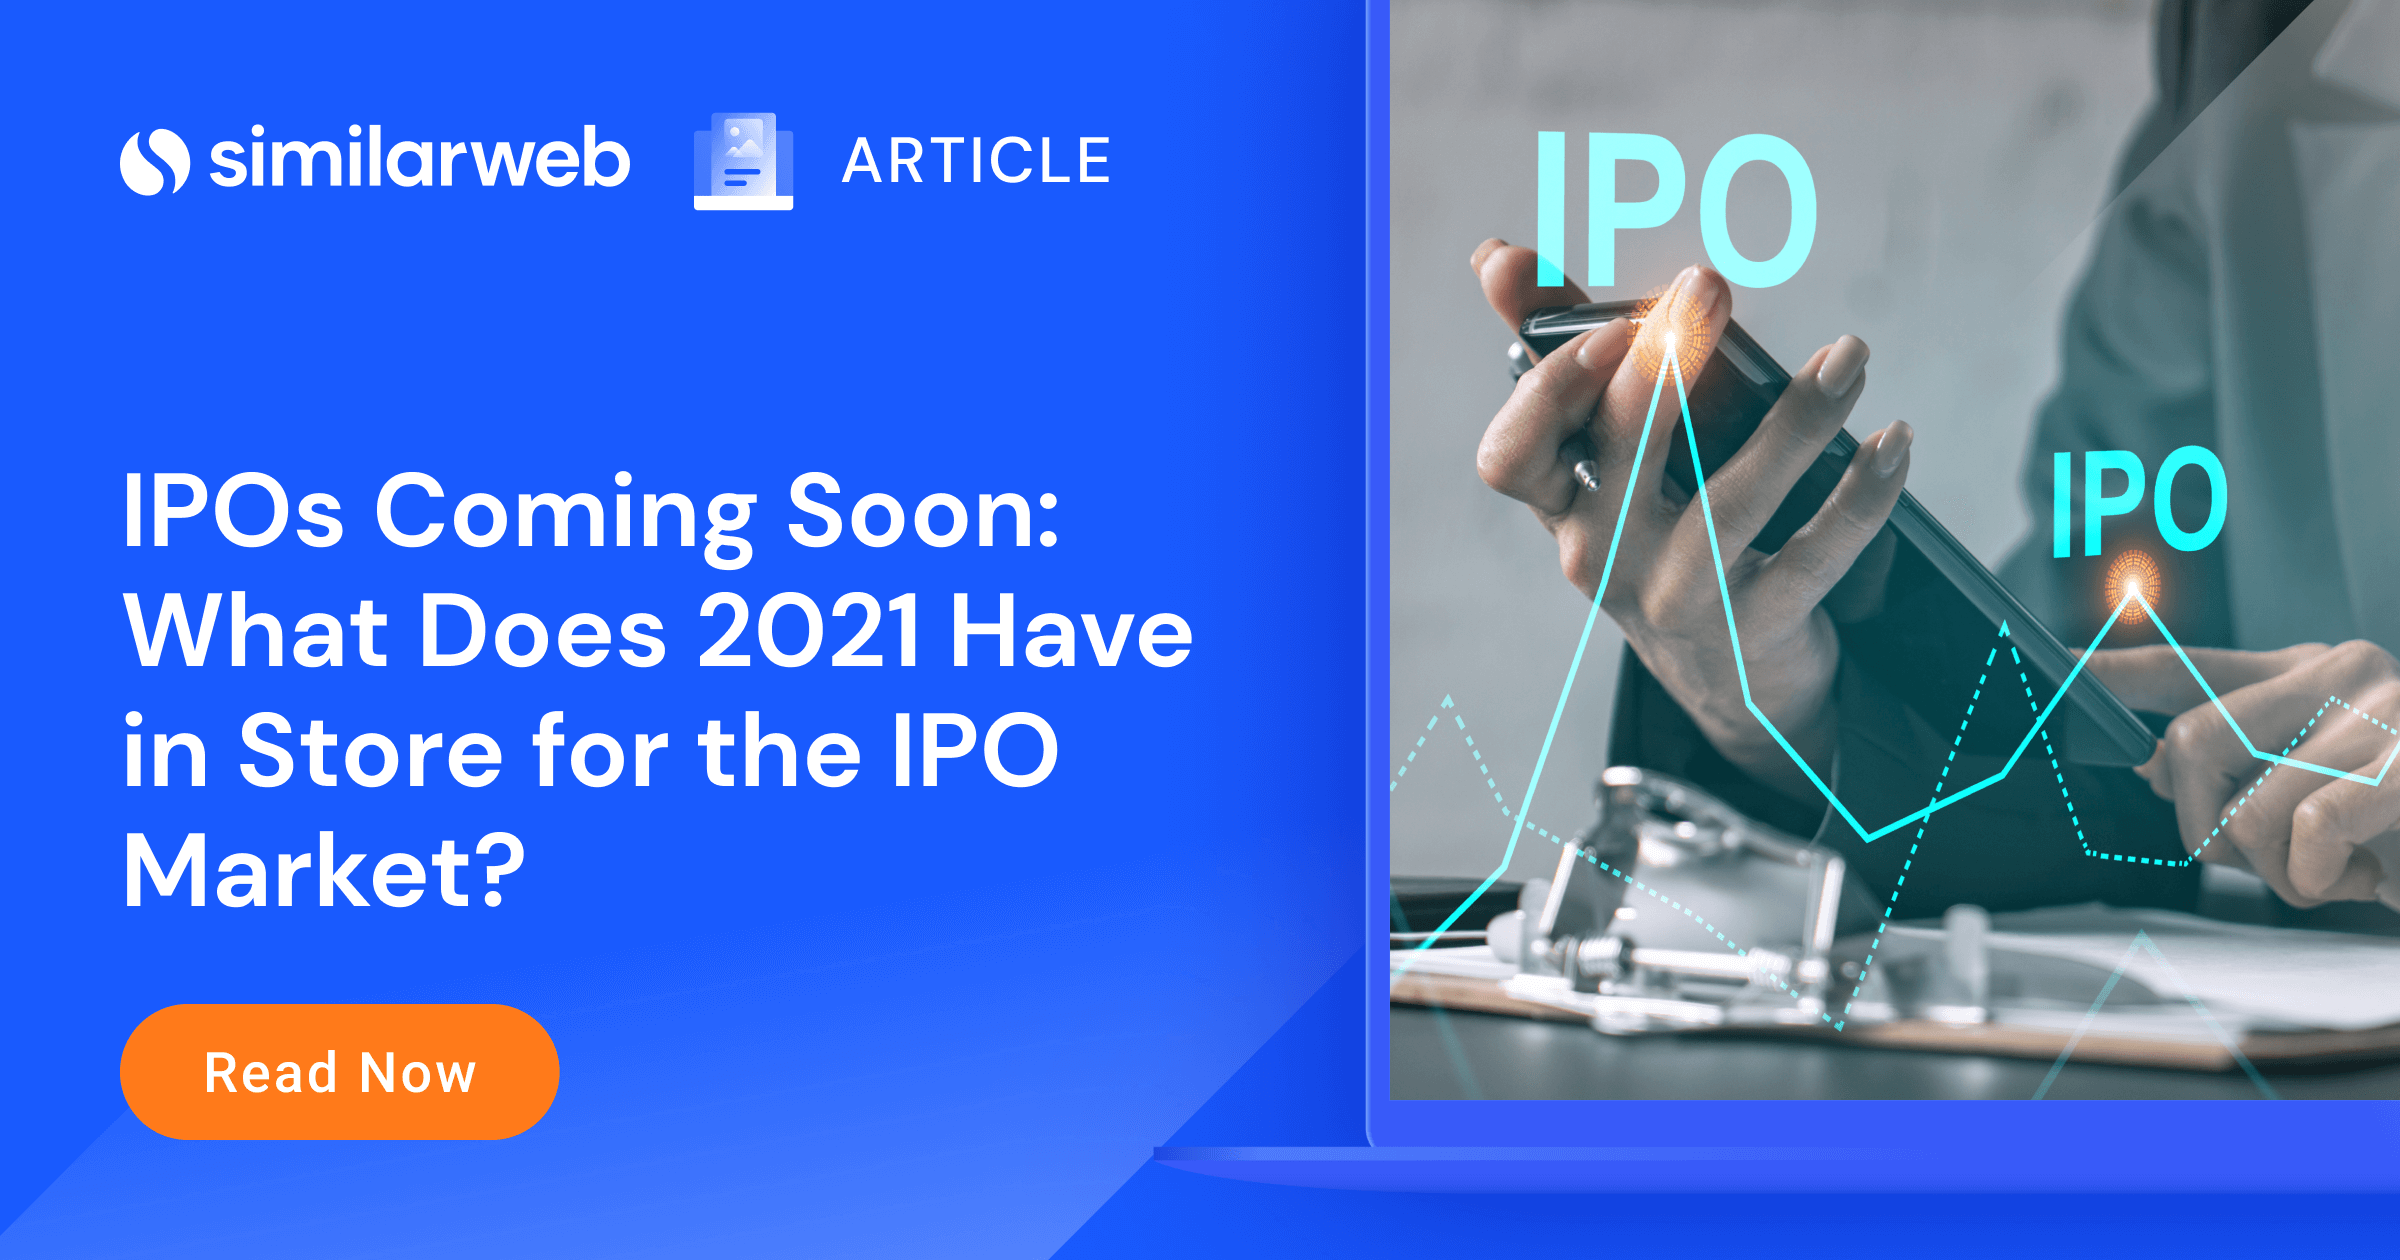 IPO Coming Soon IPOs of 2021 Similarweb